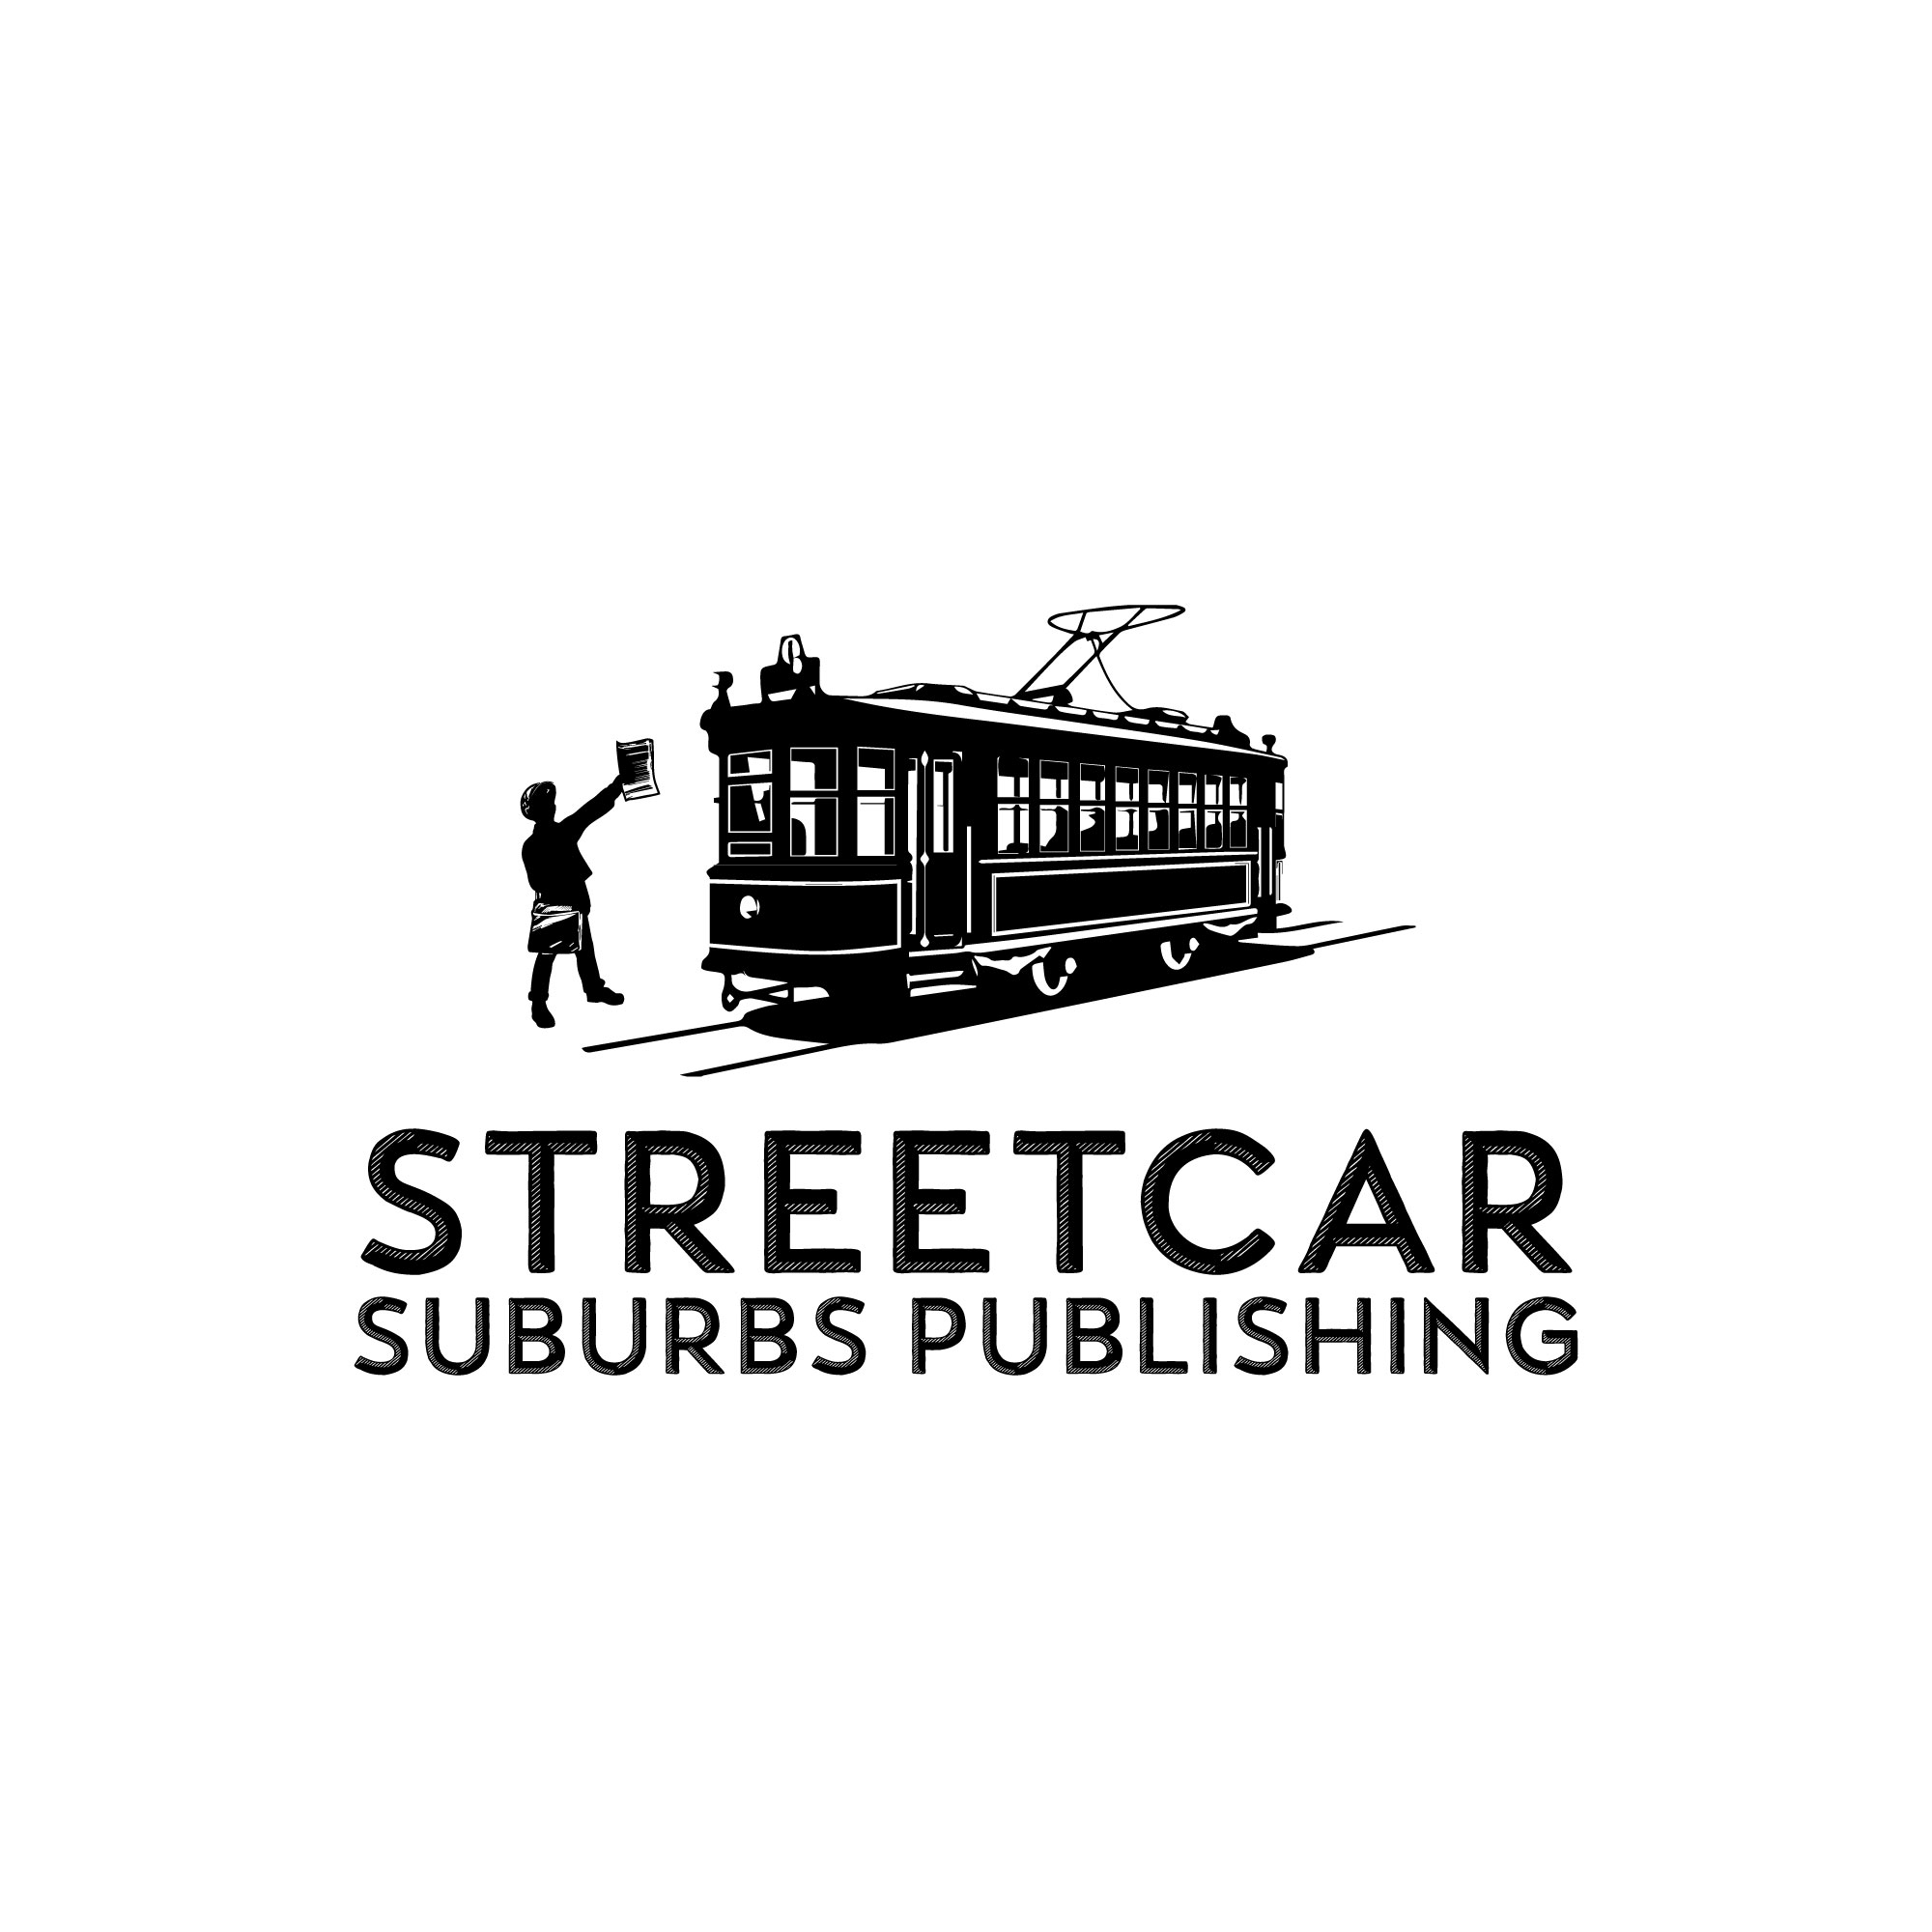 Streetcar 82 co-owner Mark Burke honored